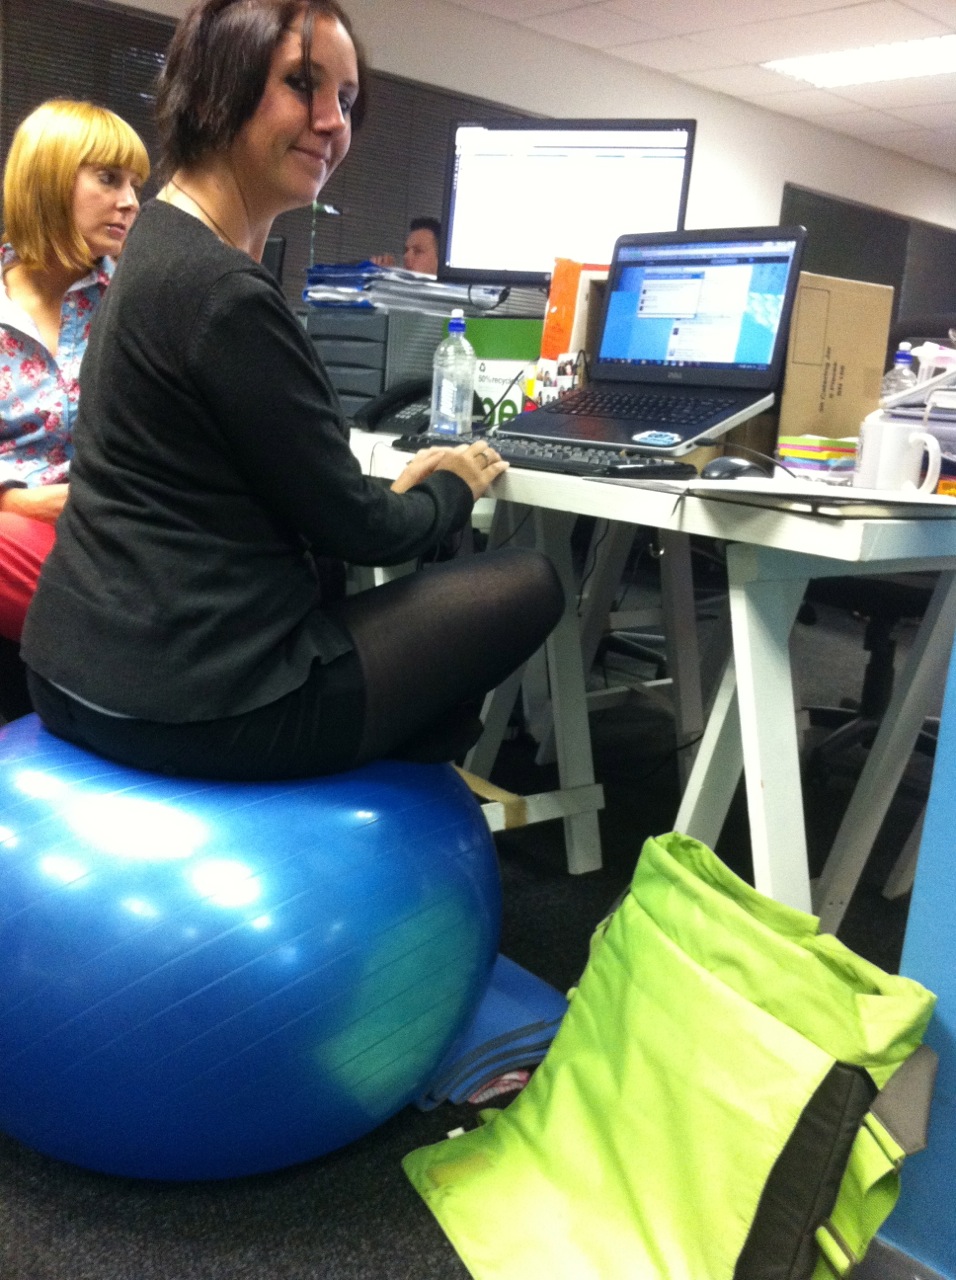 using a gym ball as an office chair